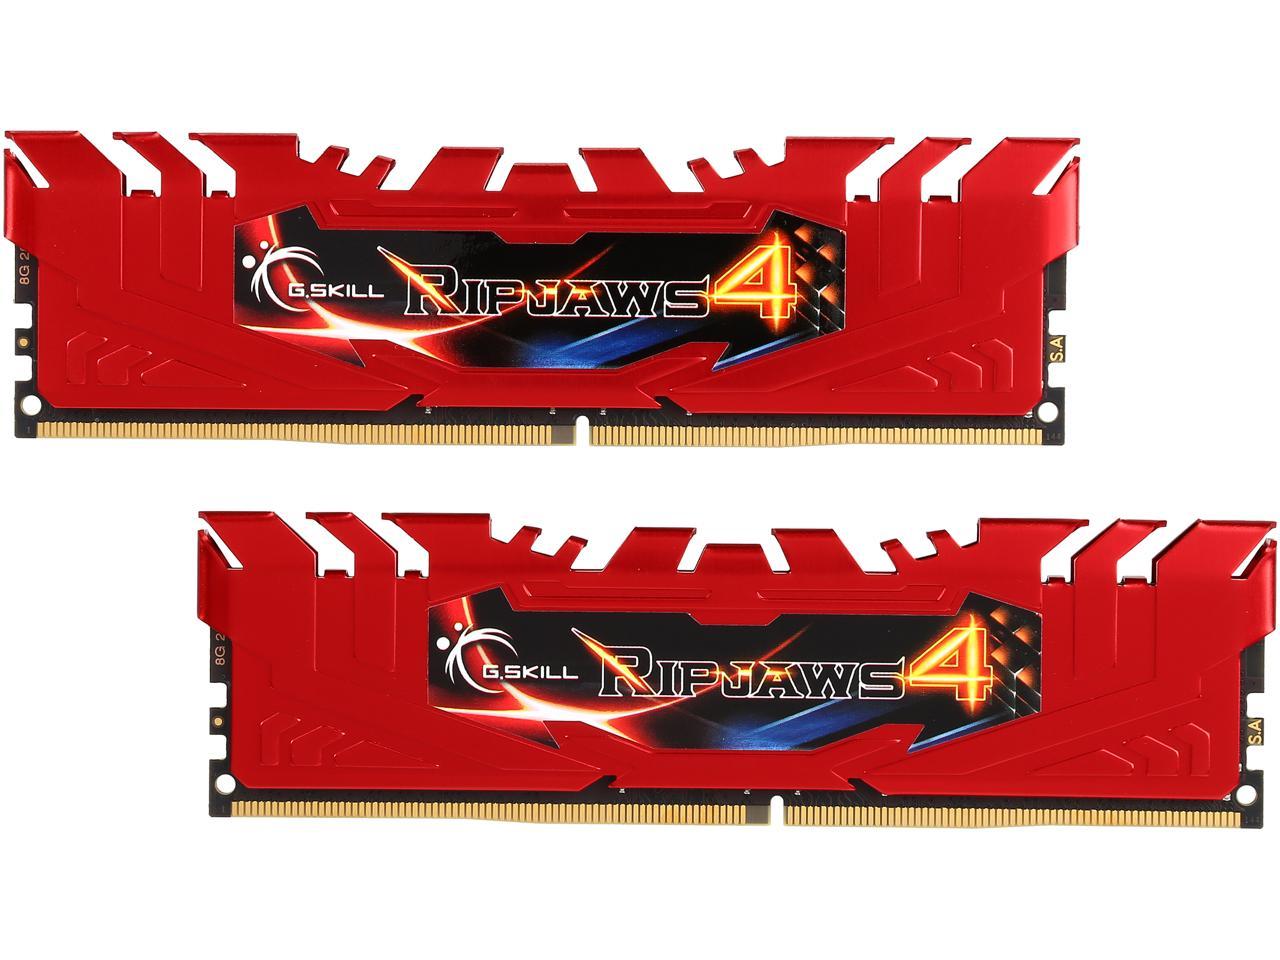 G.SKILL Ripjaws 4 Series 16GB (2 x 8GB) 288-Pin DDR4 SDRAM DDR4 2800 (PC4 22400) Intel X99 Platform Extreme Performance Memory Model F4-2800C16D-16GRR